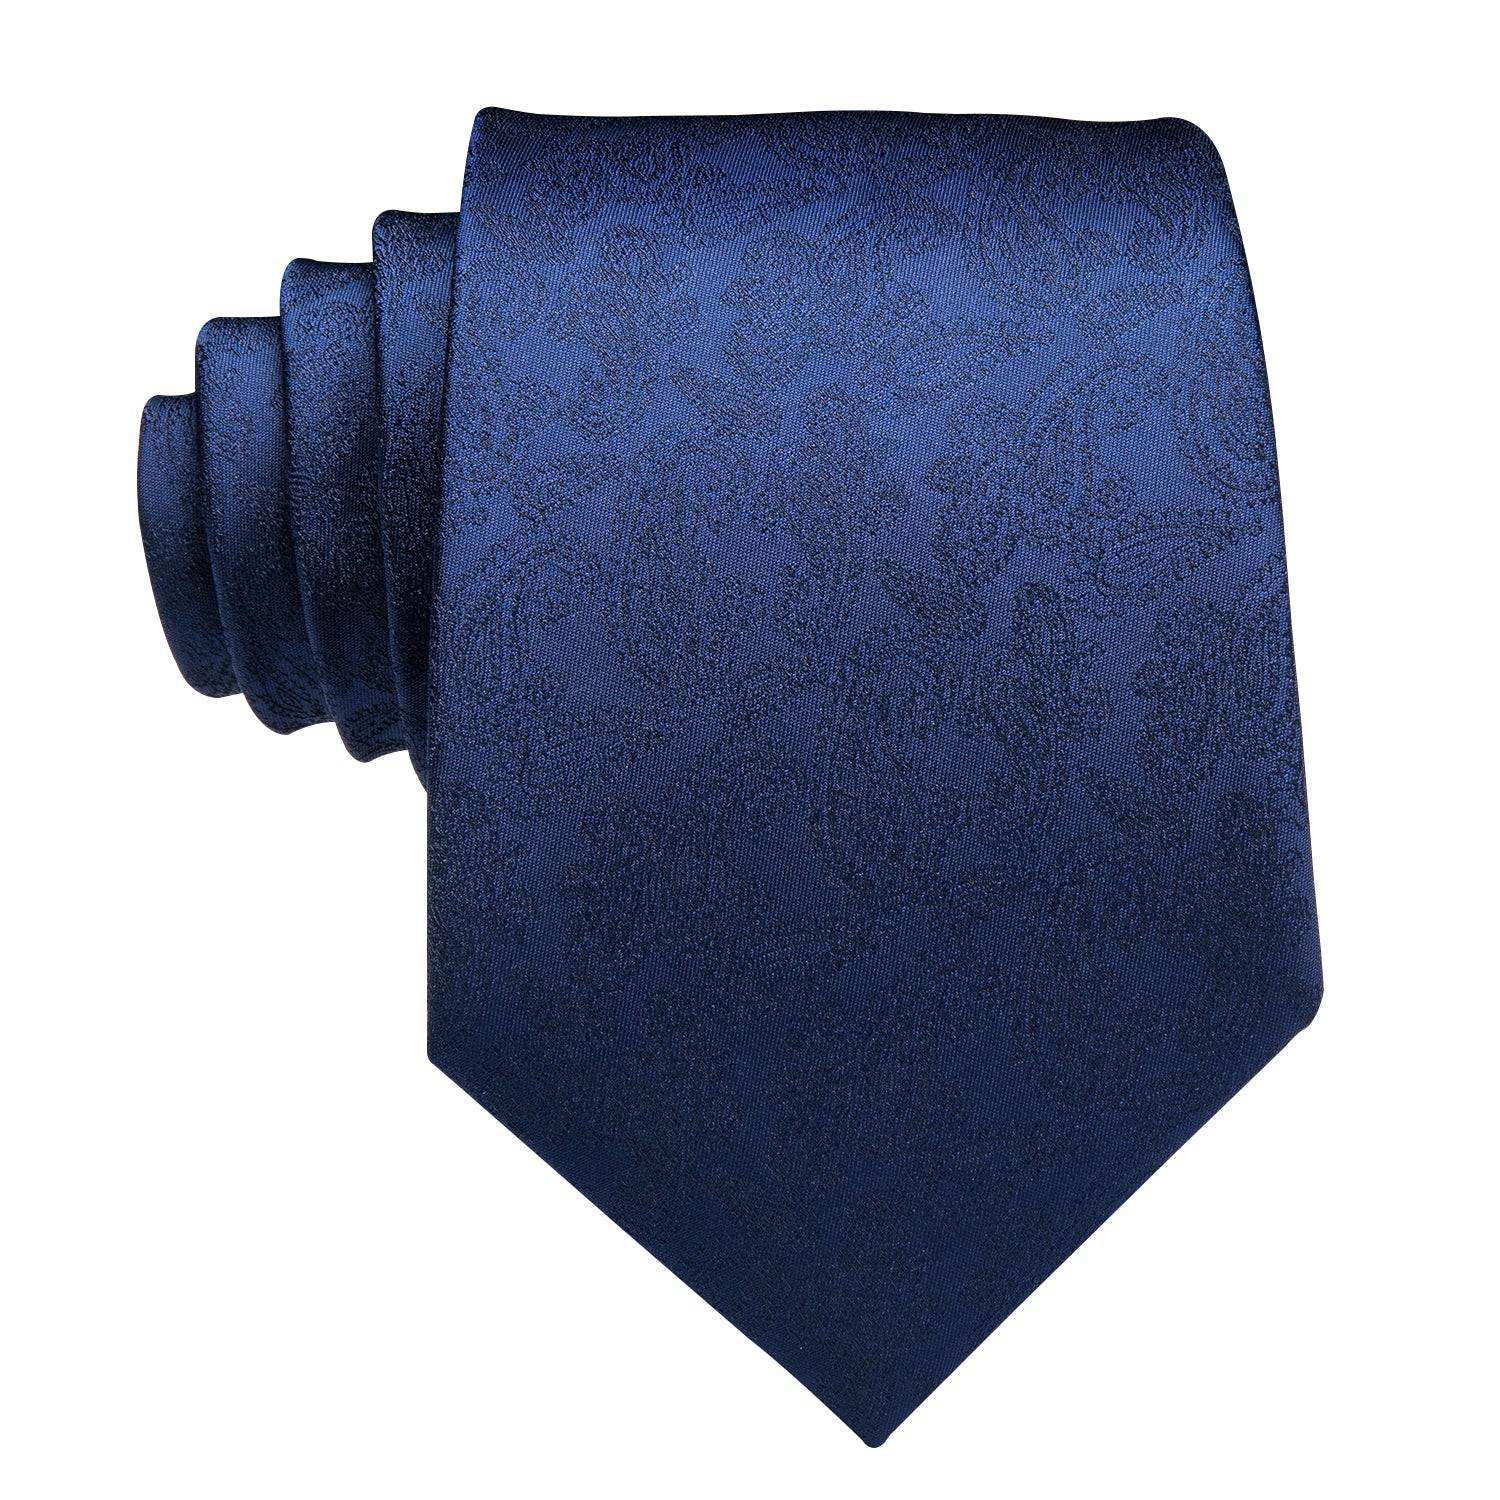 Blue Paisley Tie Pocket Square Cufflinks Set